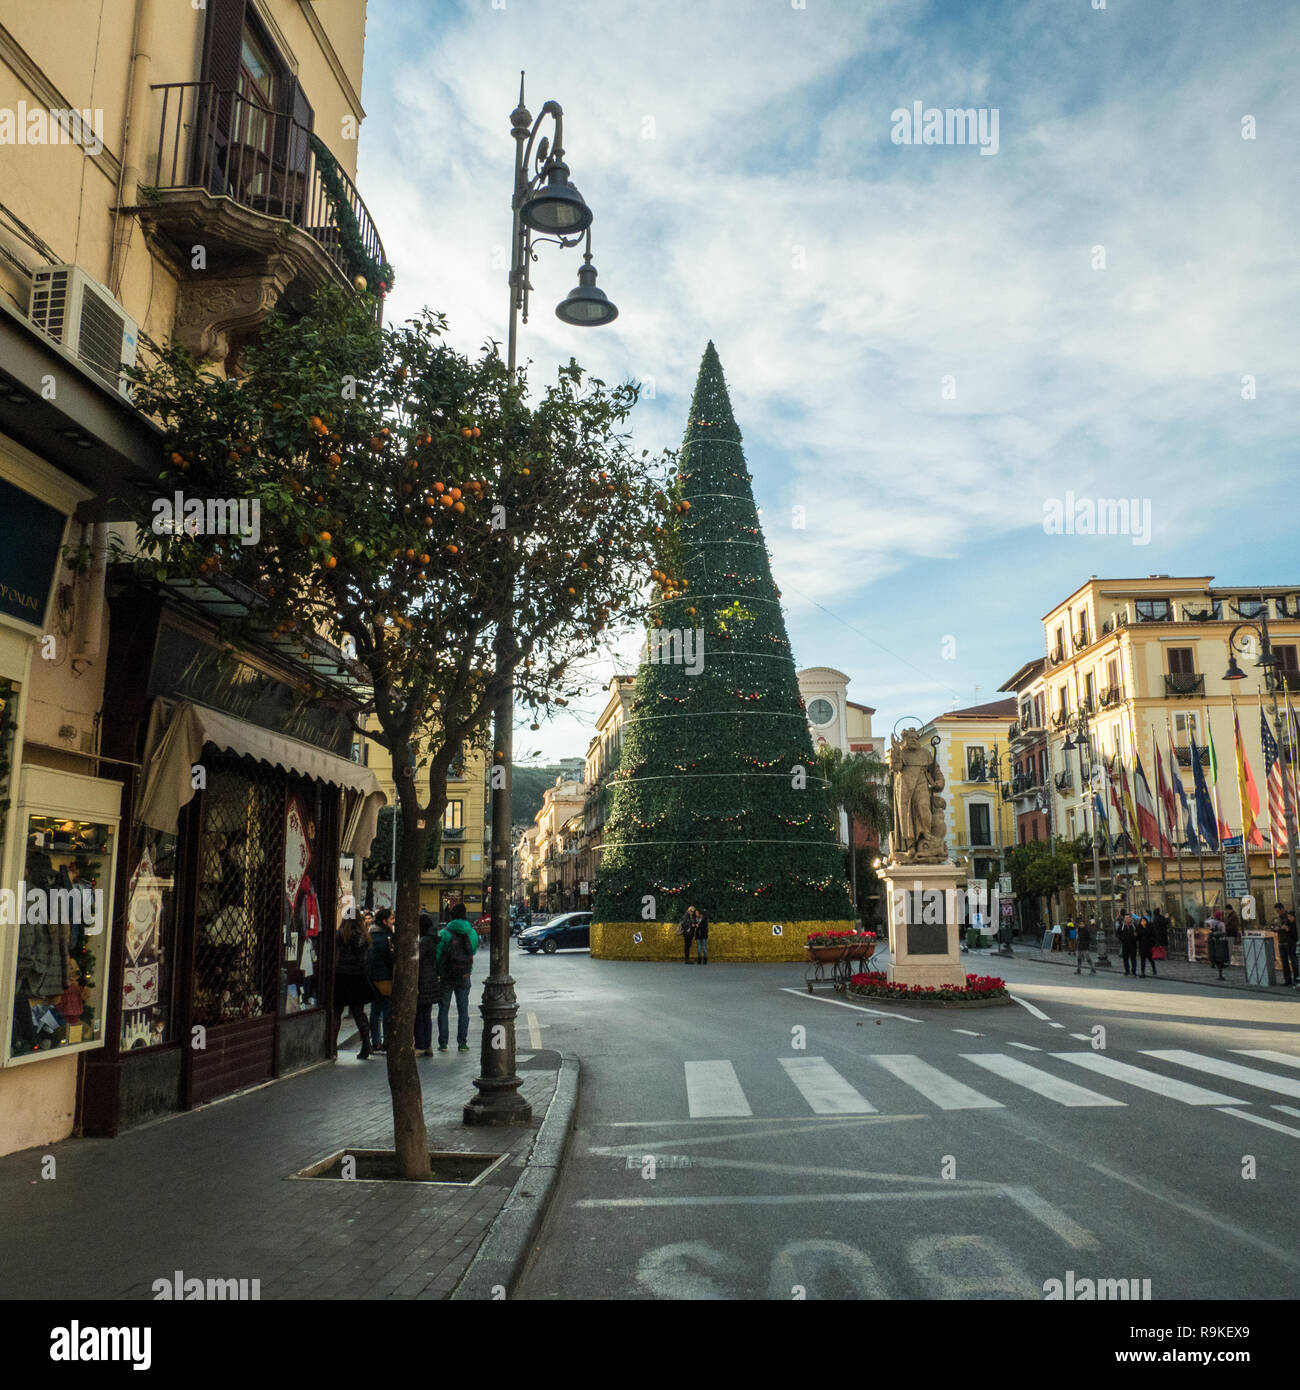 Piazza Tasso at Christmas time in Sorrento, Campania region, Italy Stock Photo